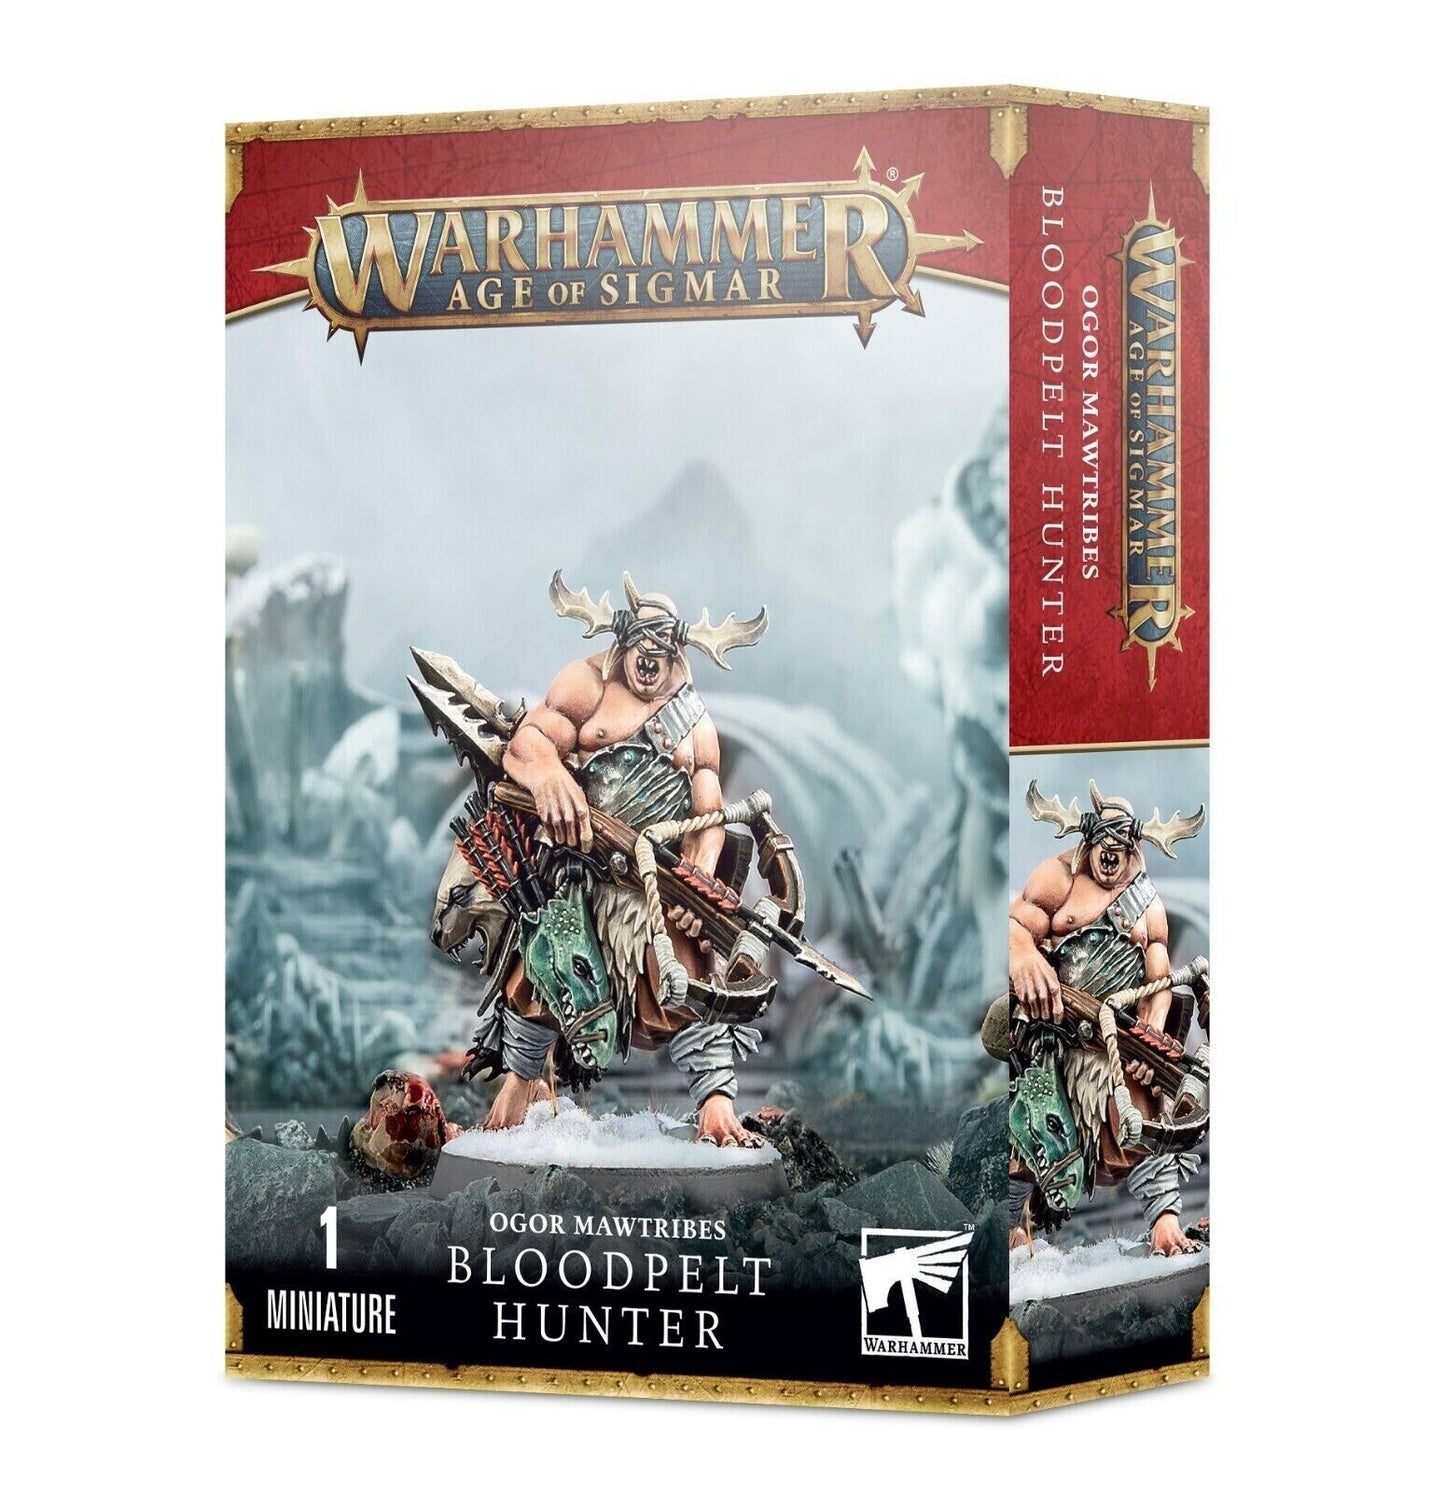 Bloodpelt Hunter Ogor Mawtribes Warhammer AoS  NIB!                      WBGames